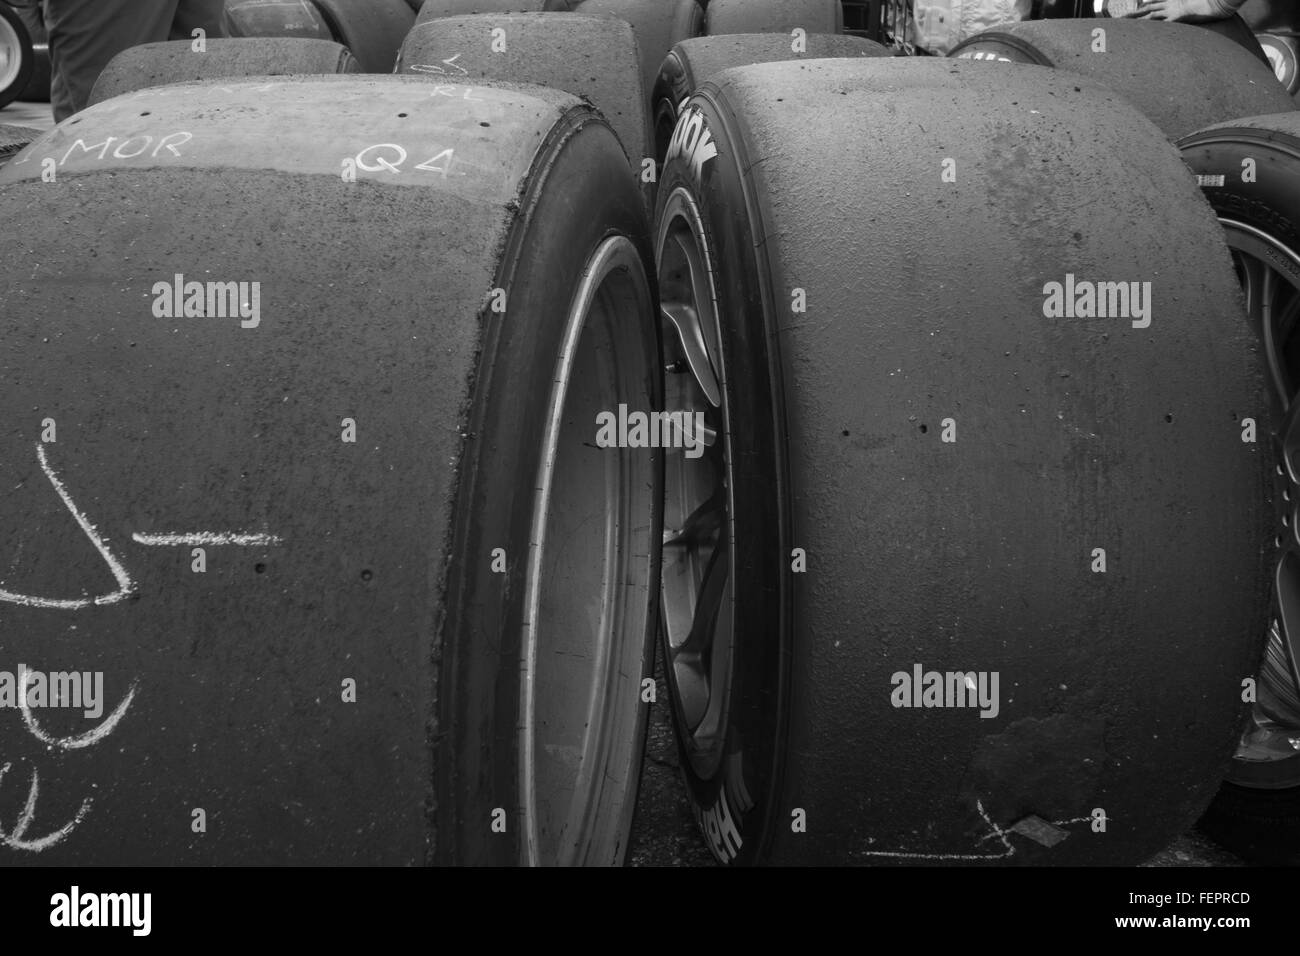 Racing tyres Stock Photo